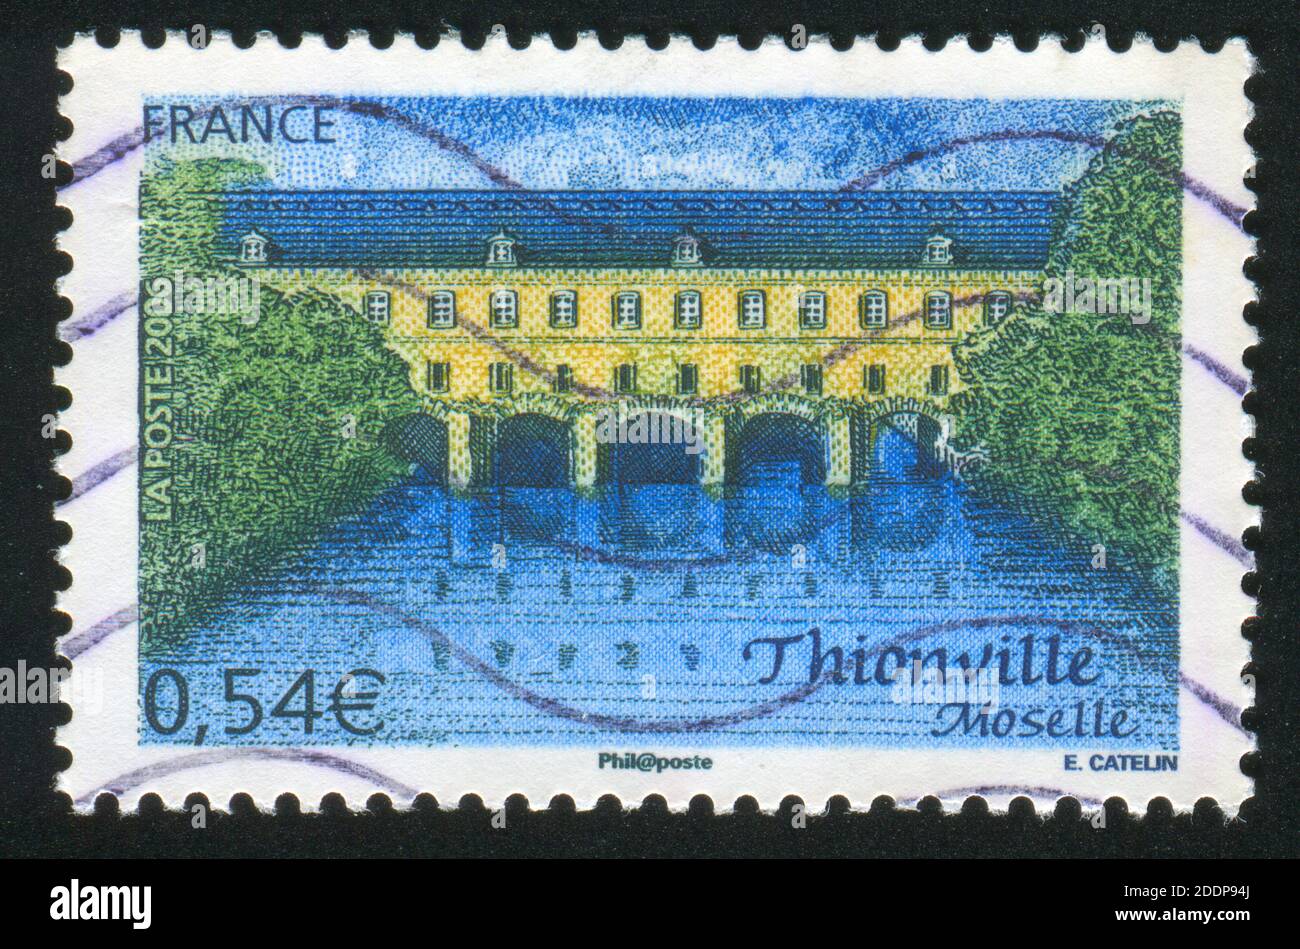 FRANCIA - ALREDEDOR de 2006: Sello impreso por Francia, muestra Thionville Moselle, alrededor de 2006 Foto de stock